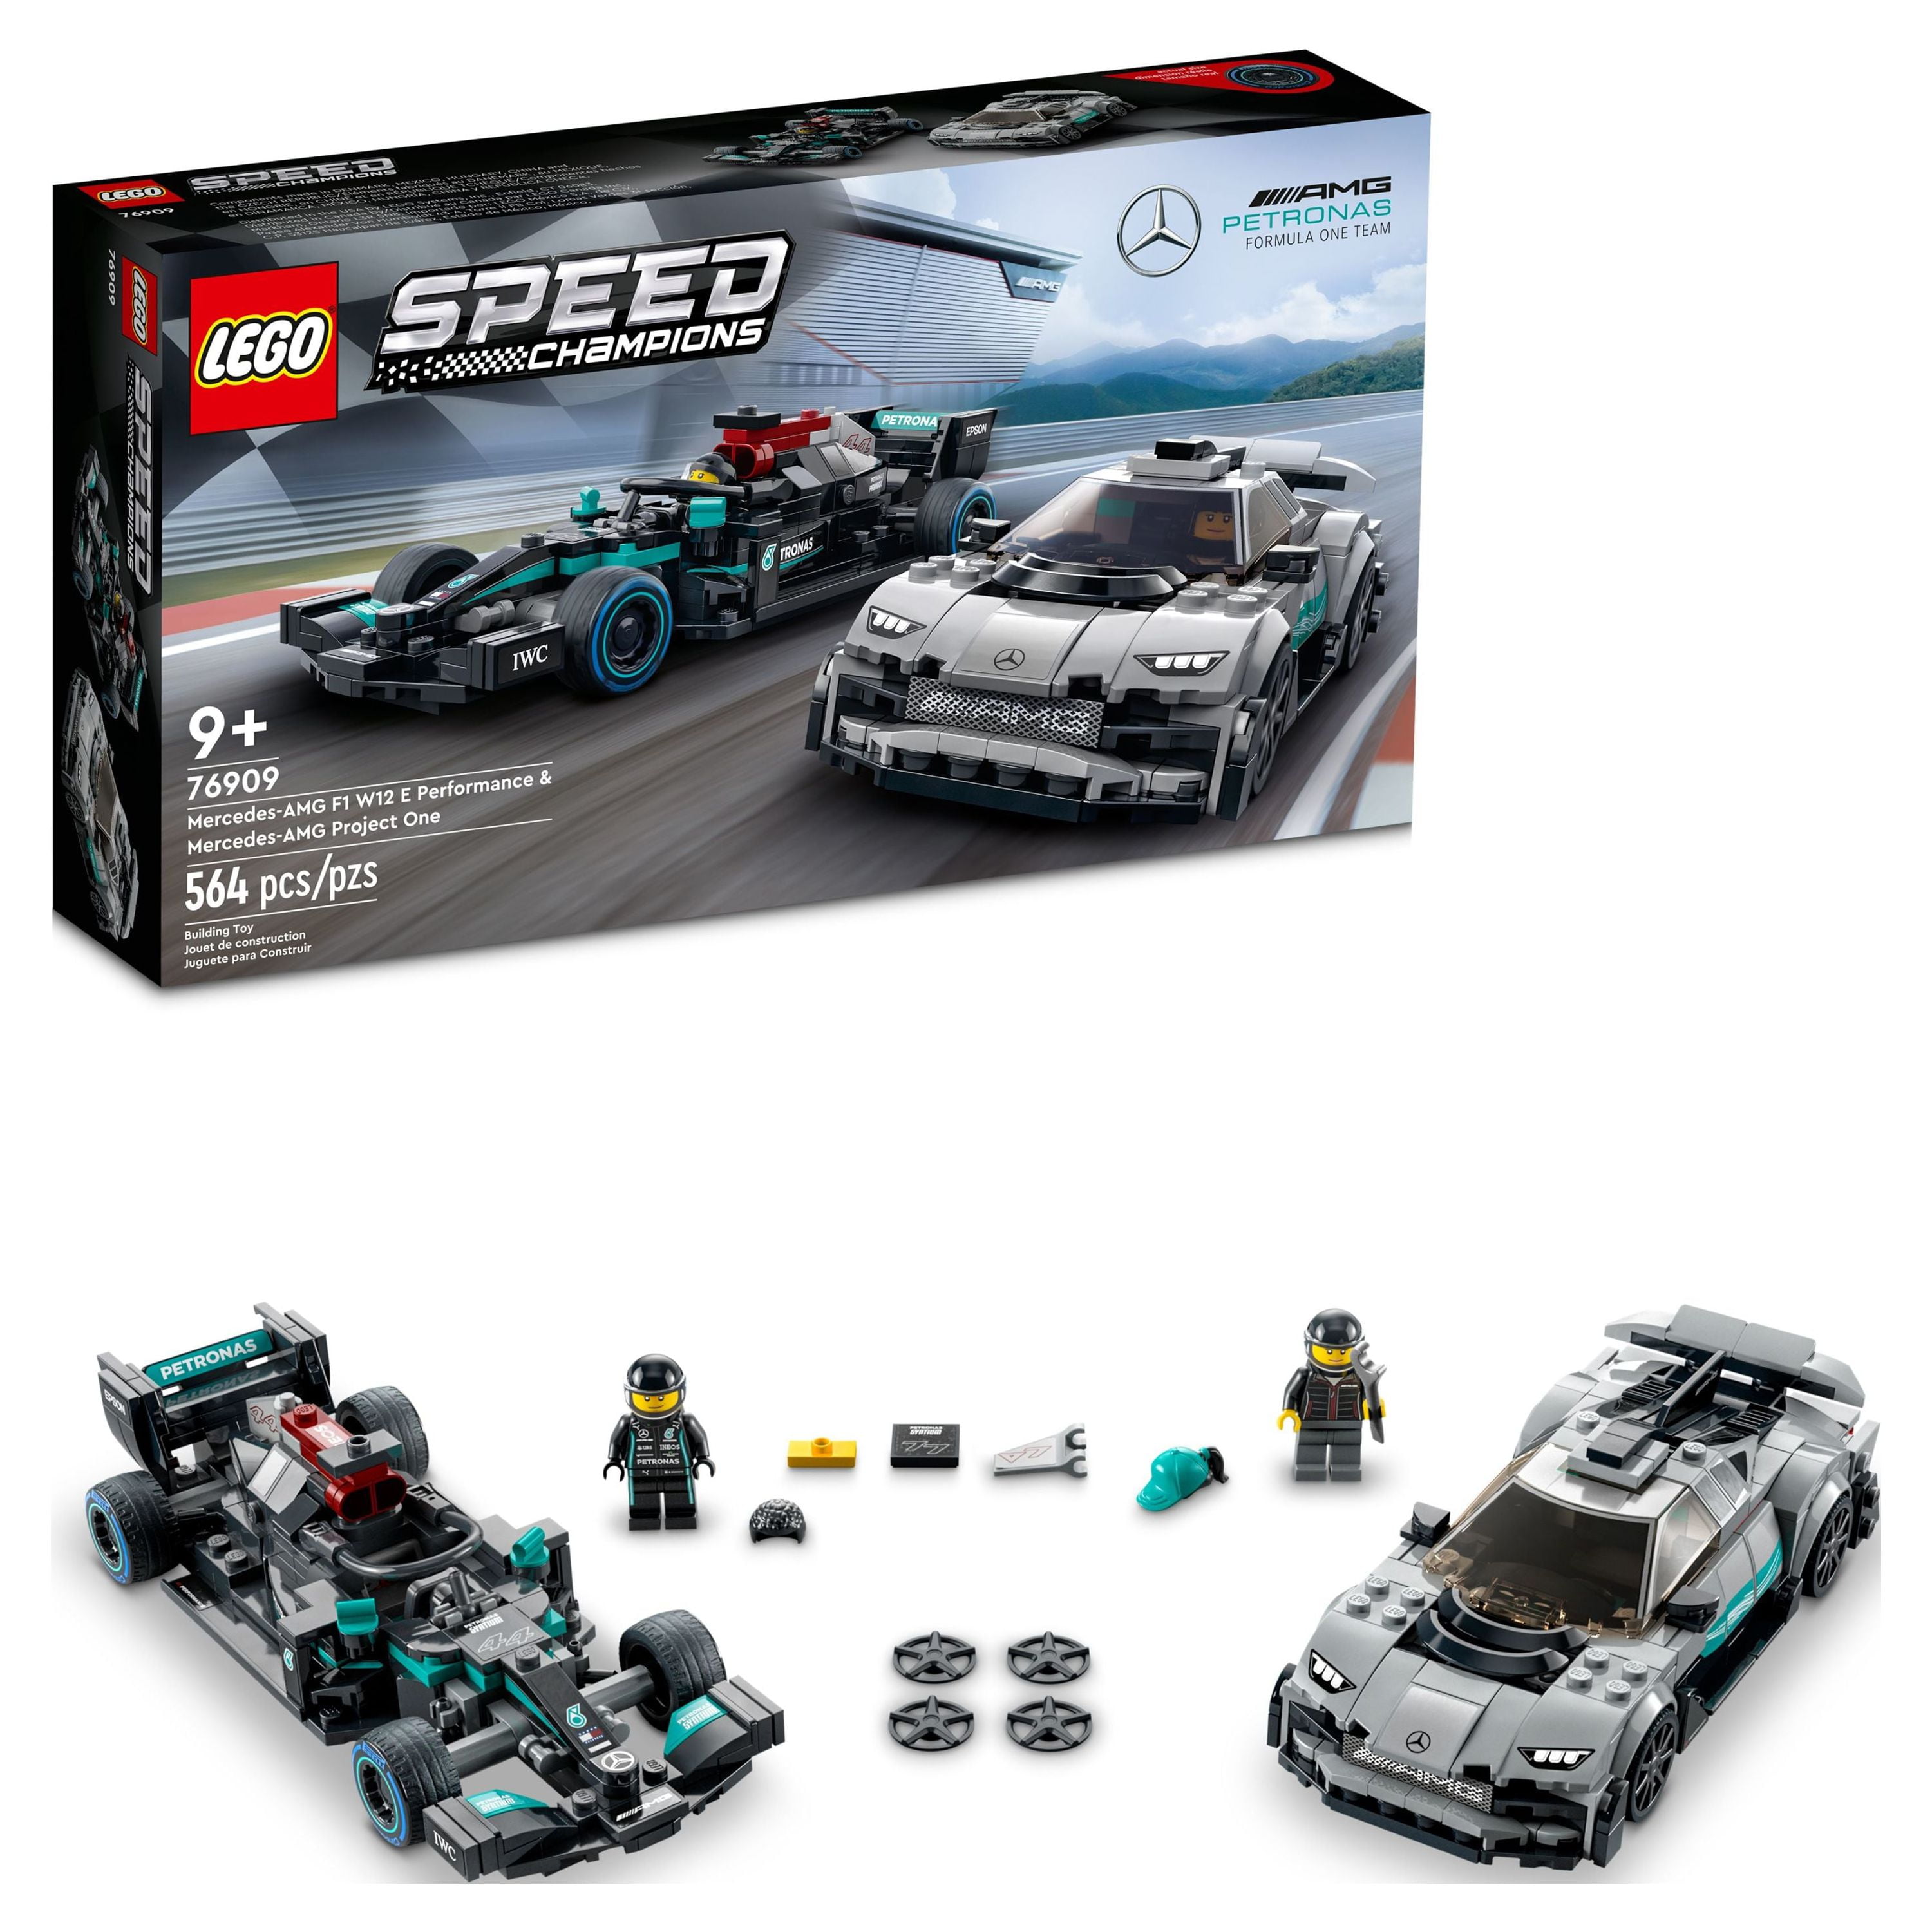 76902 Mclaren 'lego®' Speed Champions - N/A - Kiabi - 23.99€